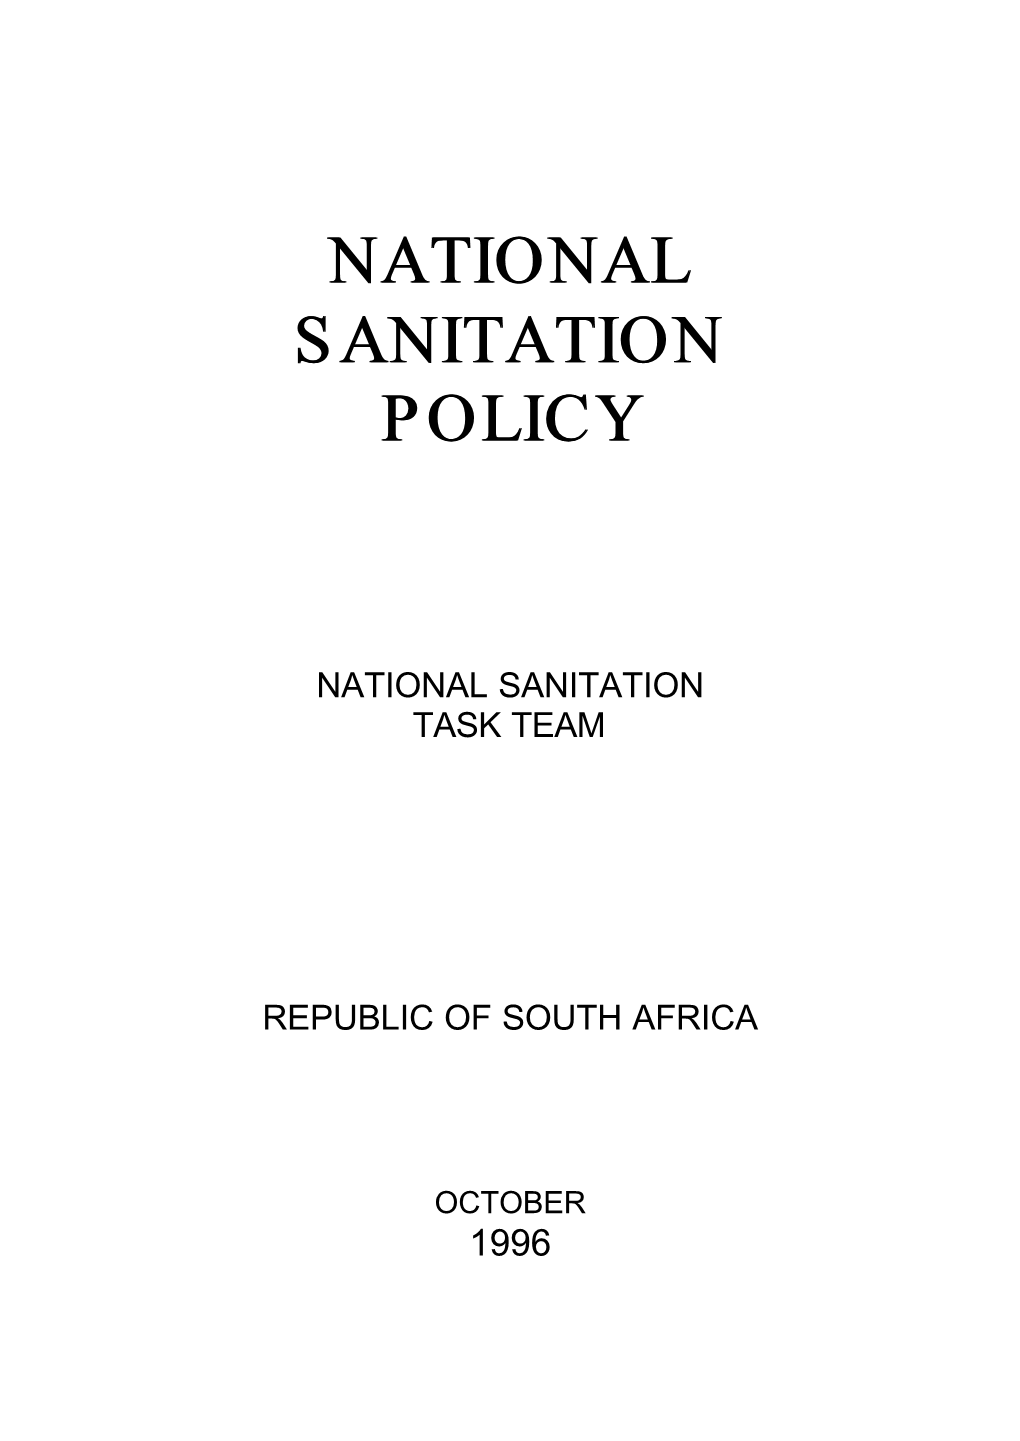 National Sanitation Policy